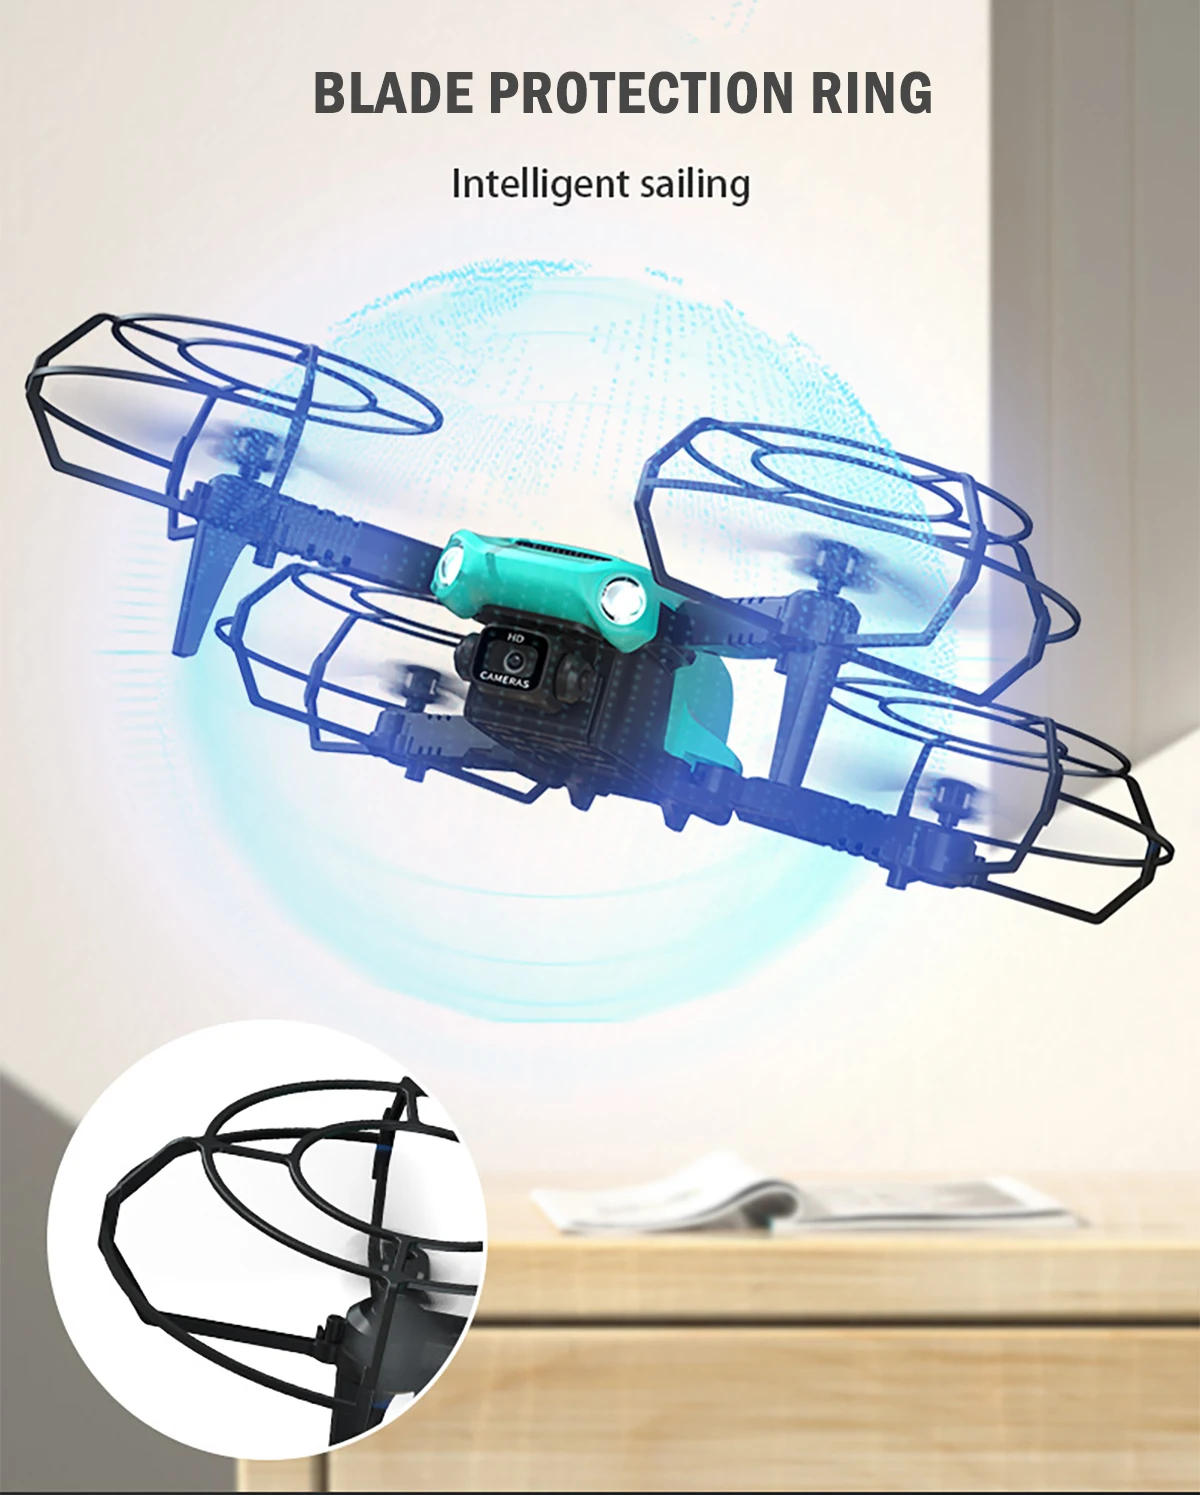 JJRC H111 RC Drone, intelligent sailing ring intelligent